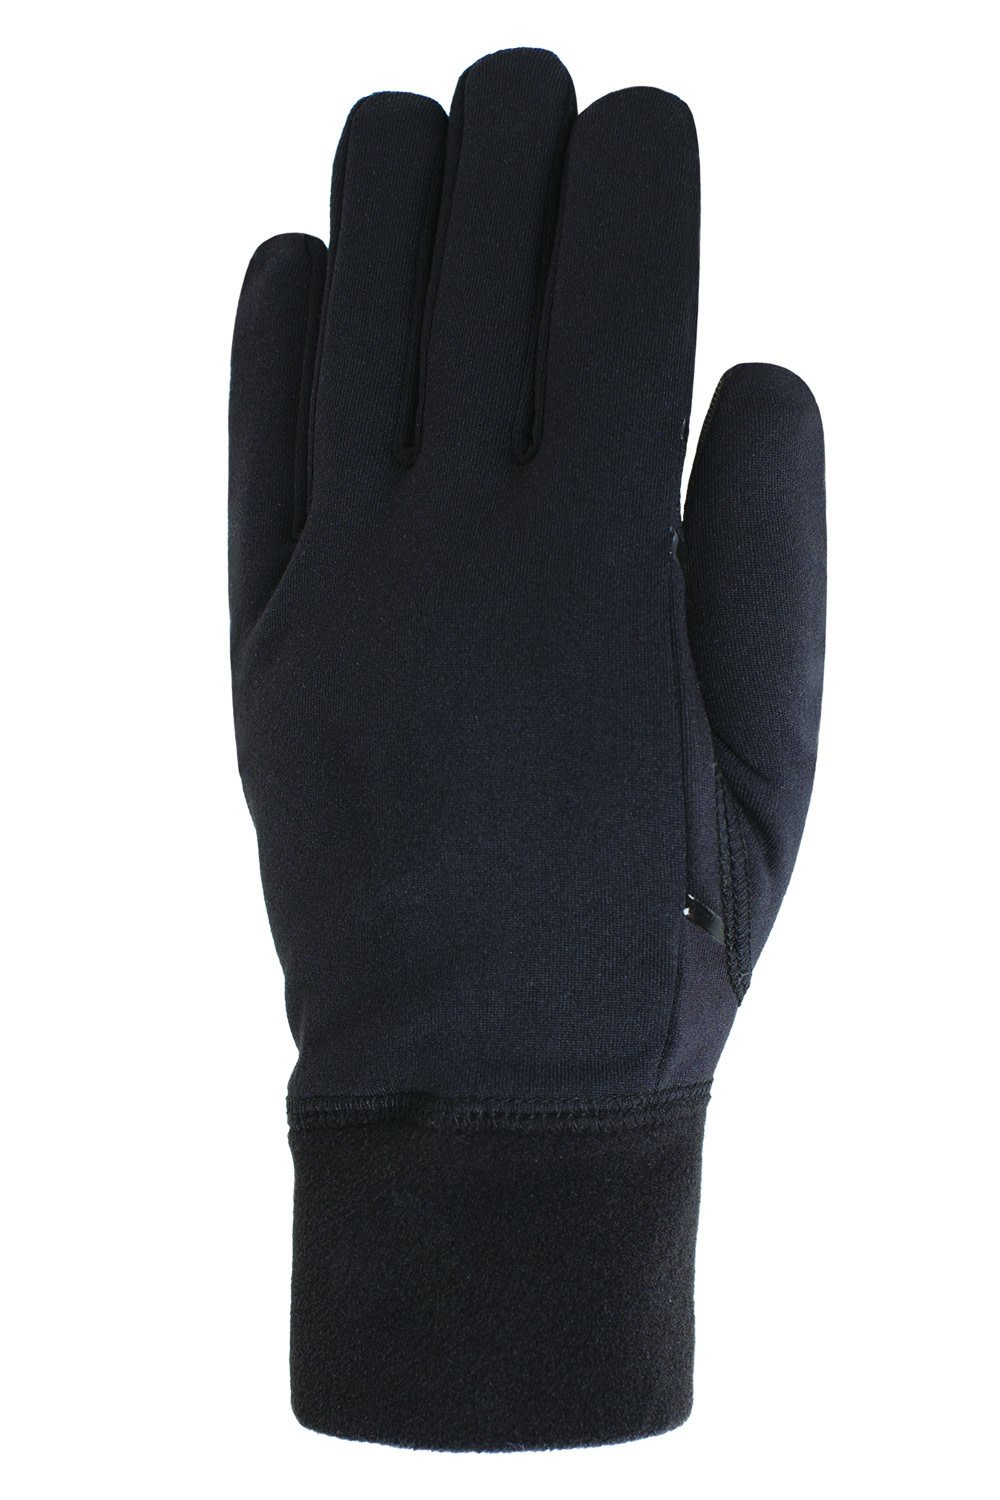 Auclair men's J-Walker gloves